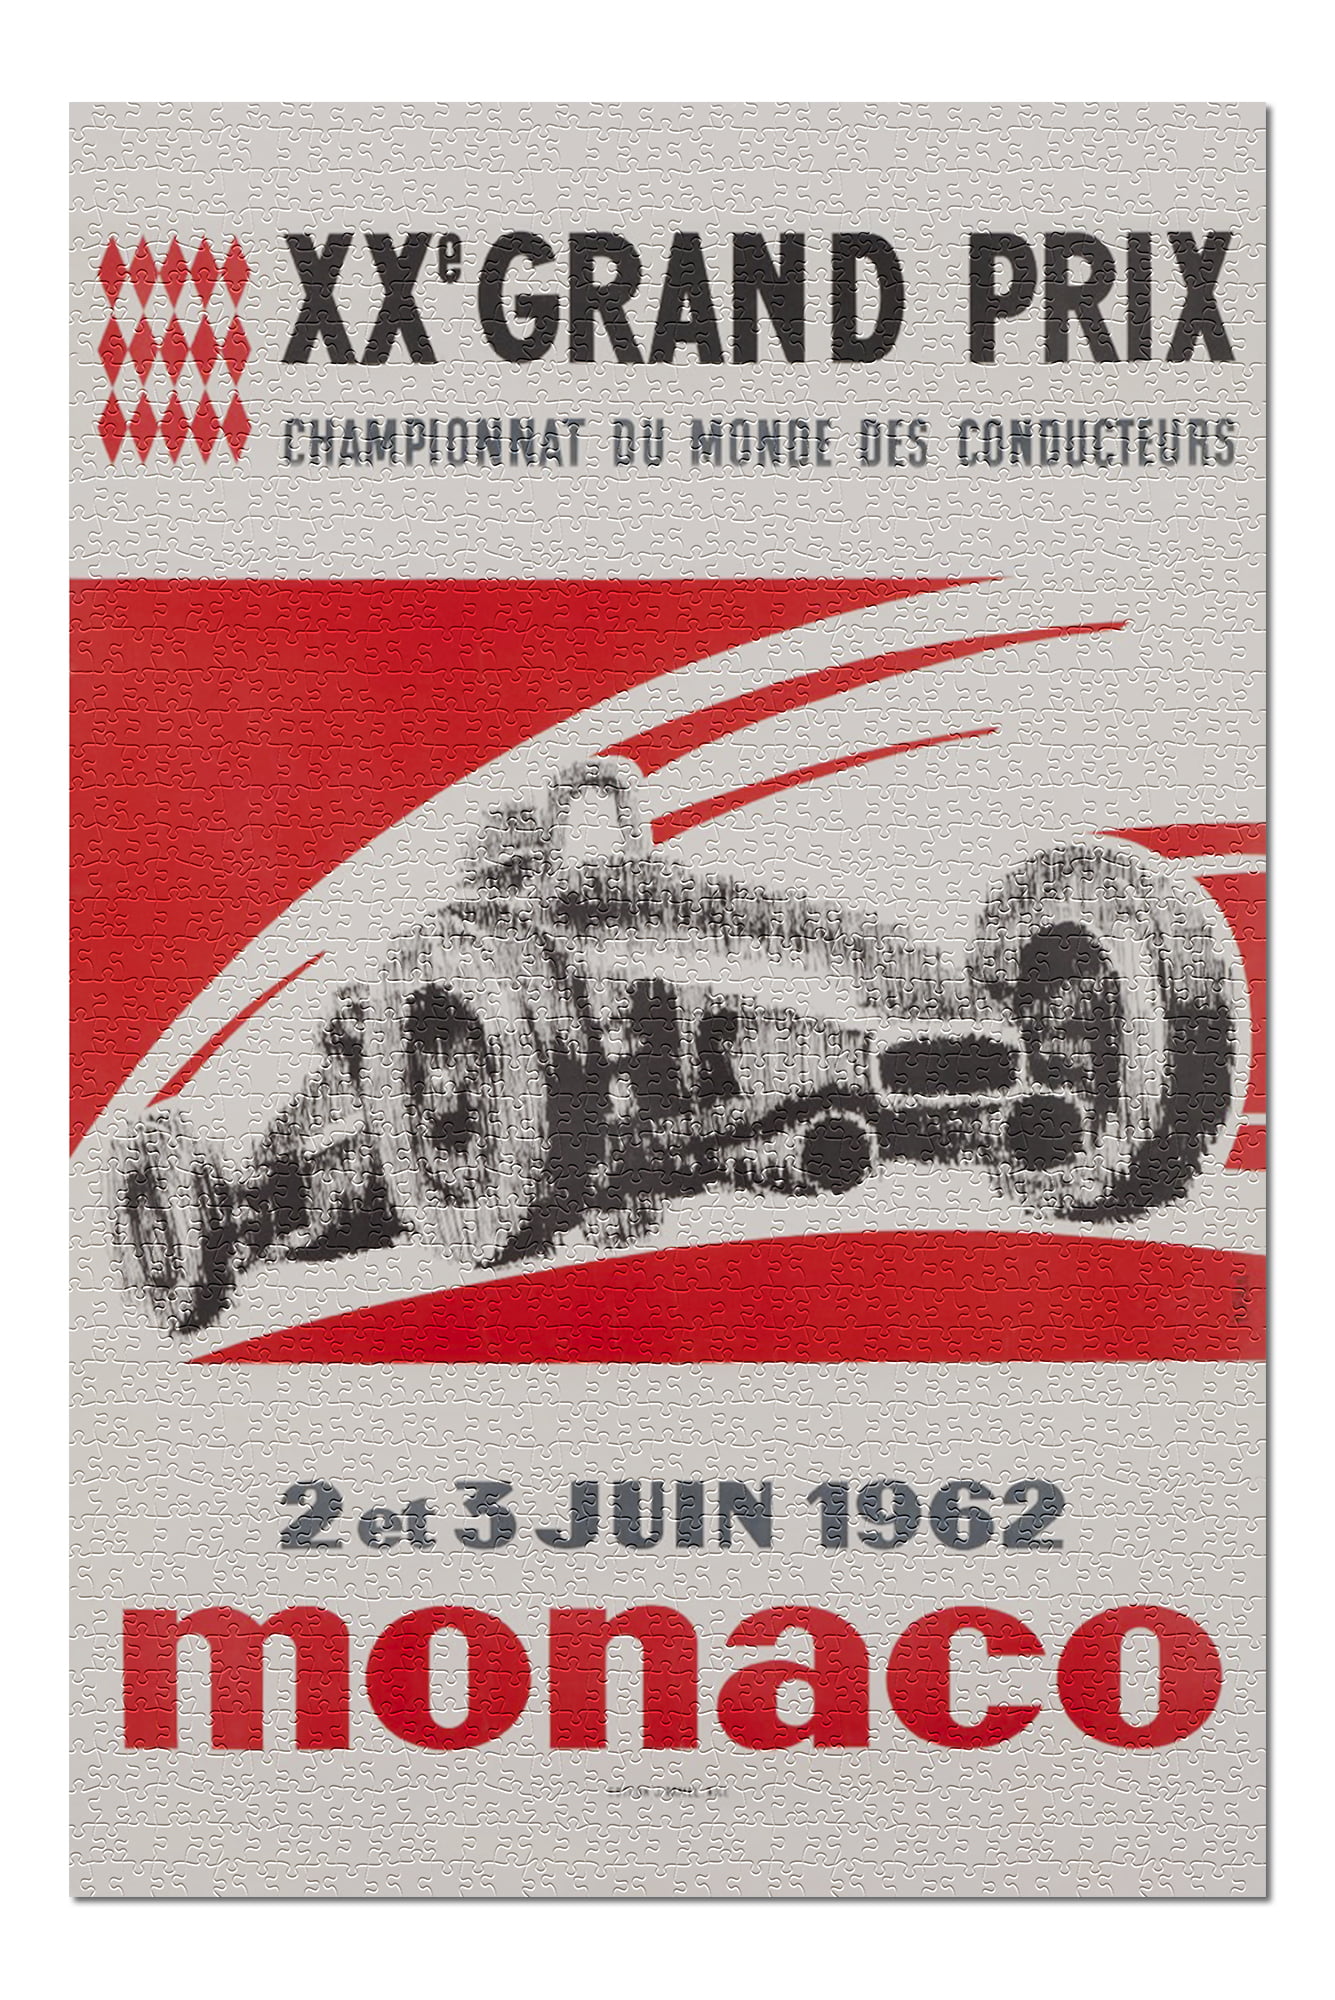 1934 Monaco Grand Prix Vintage Style Red Race Car Poster 24x36 